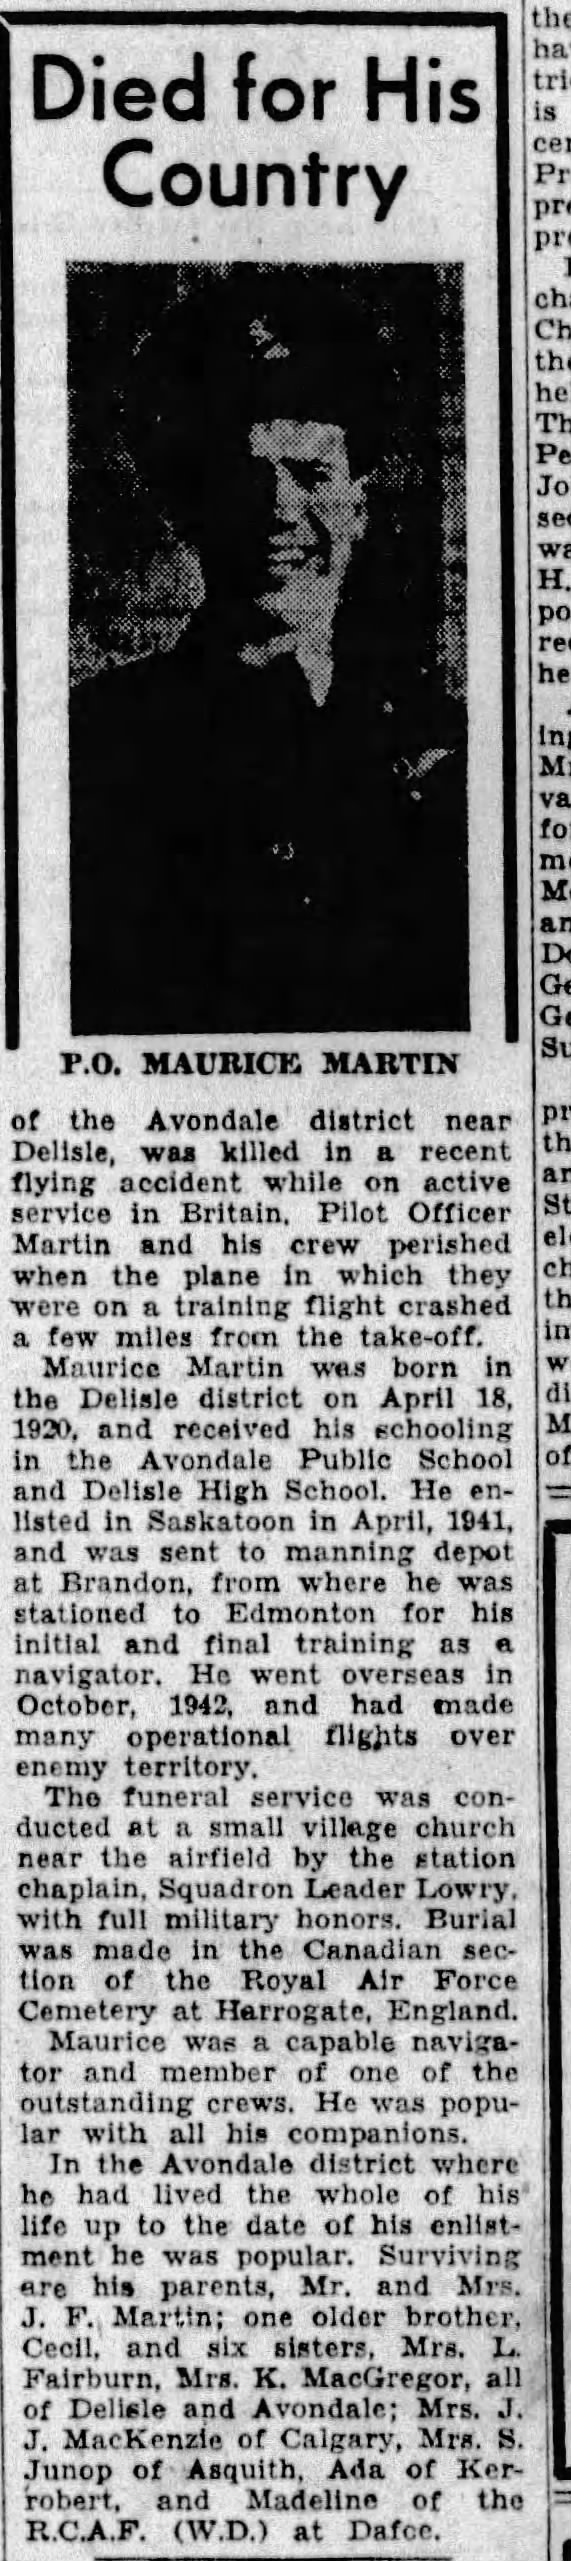 Pilot Officer Maurice Martin of Delisle killed